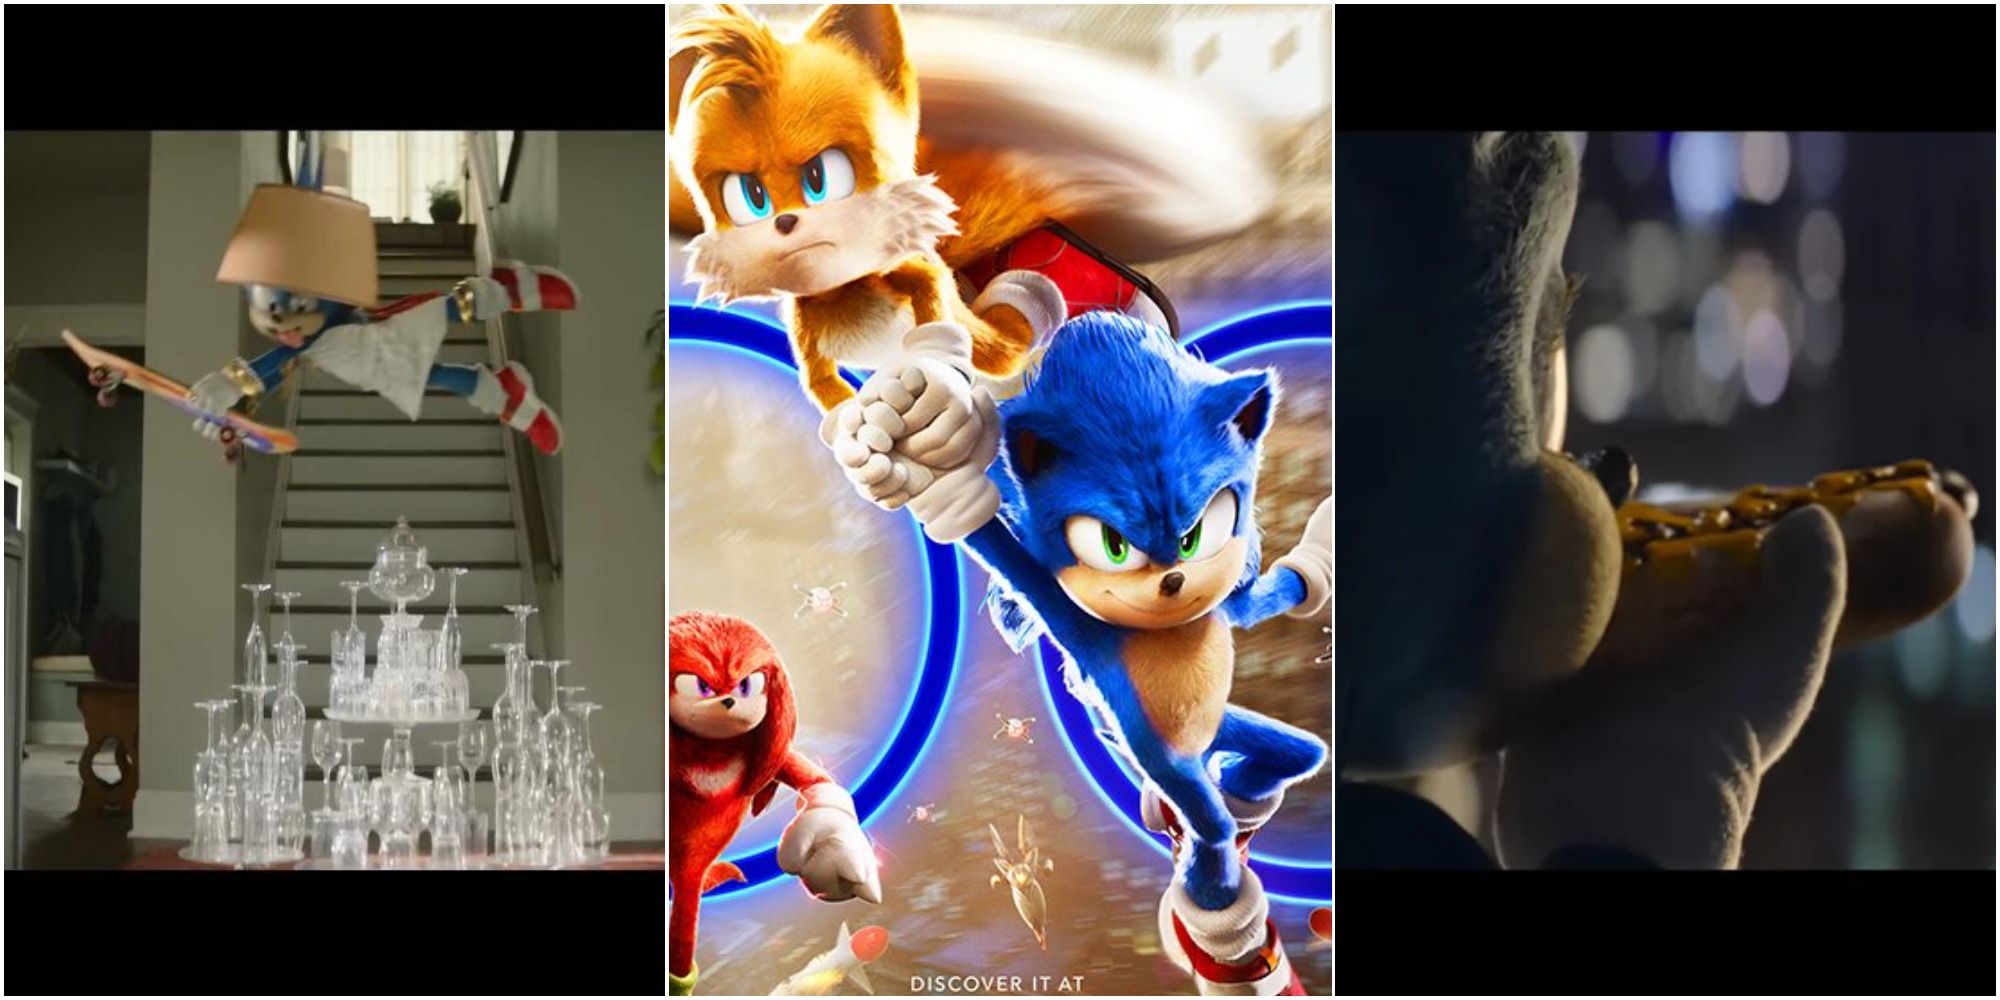 Sonic the Hedgehog 2 review – no surprises in Sega's speedy